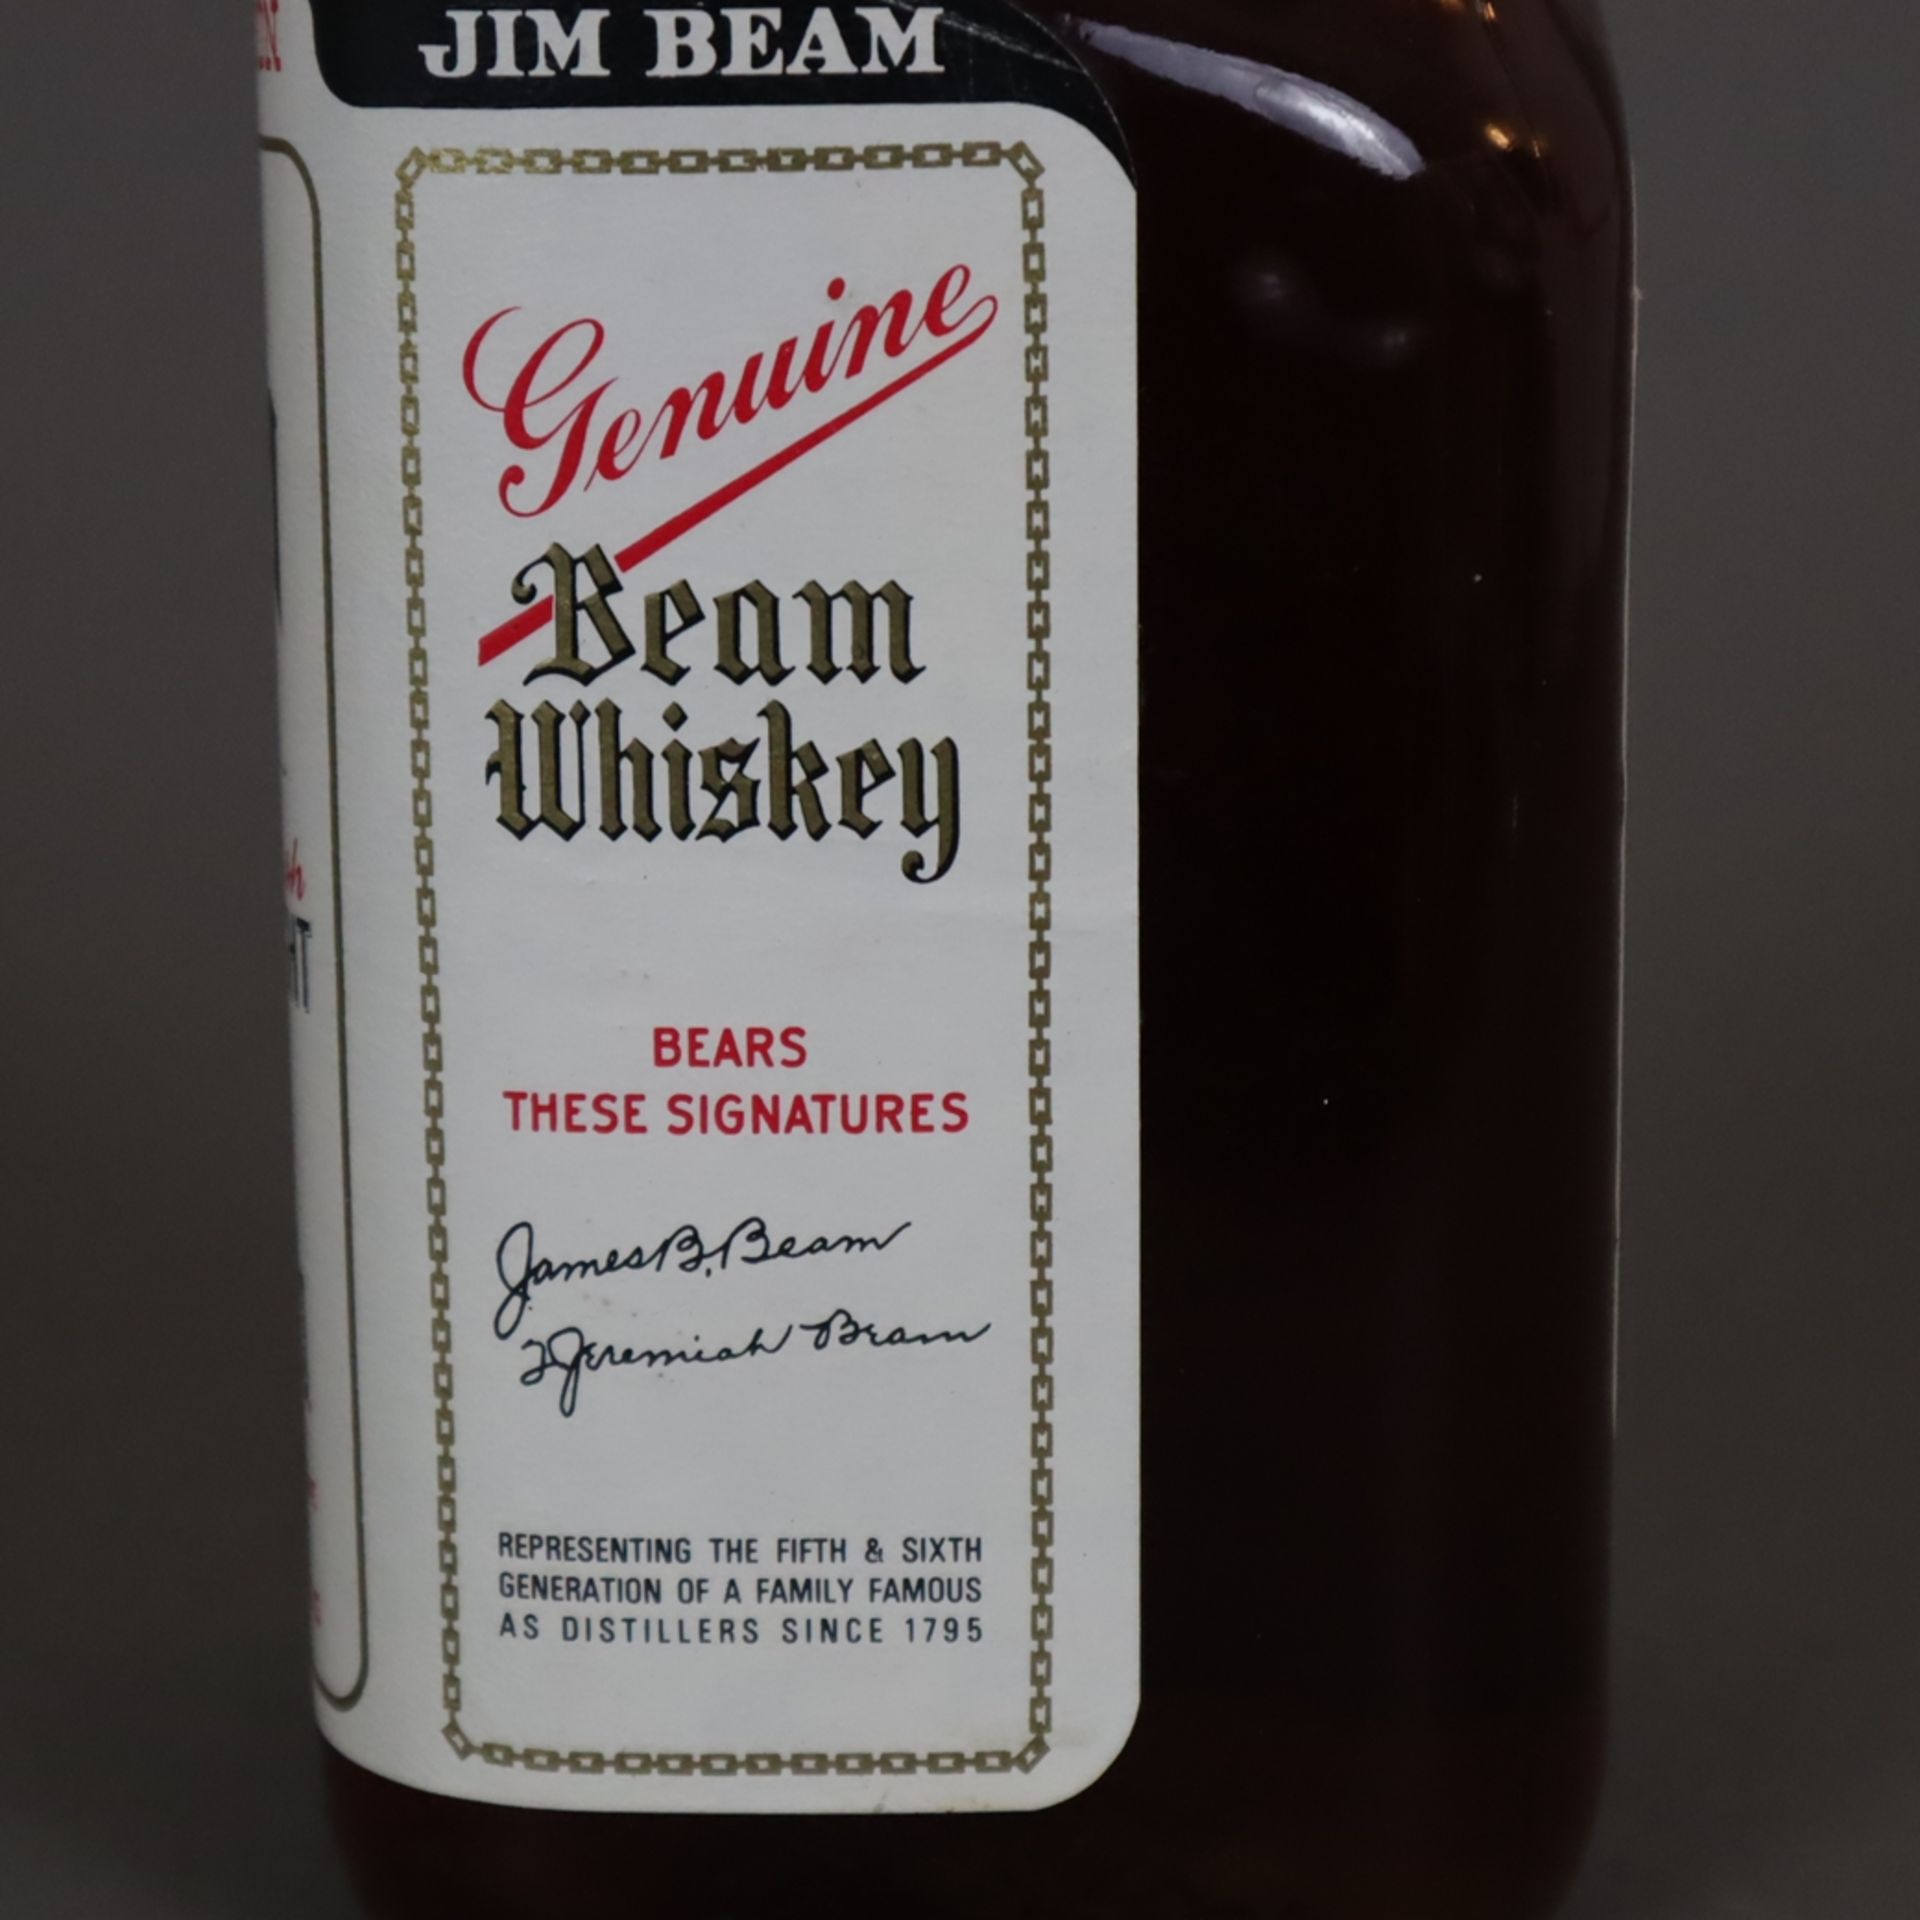 Whiskey - Jim Beam 1,75 Liter Bourbon Whiskey in Henkelflasche, distilled in Kentucky - Image 5 of 7